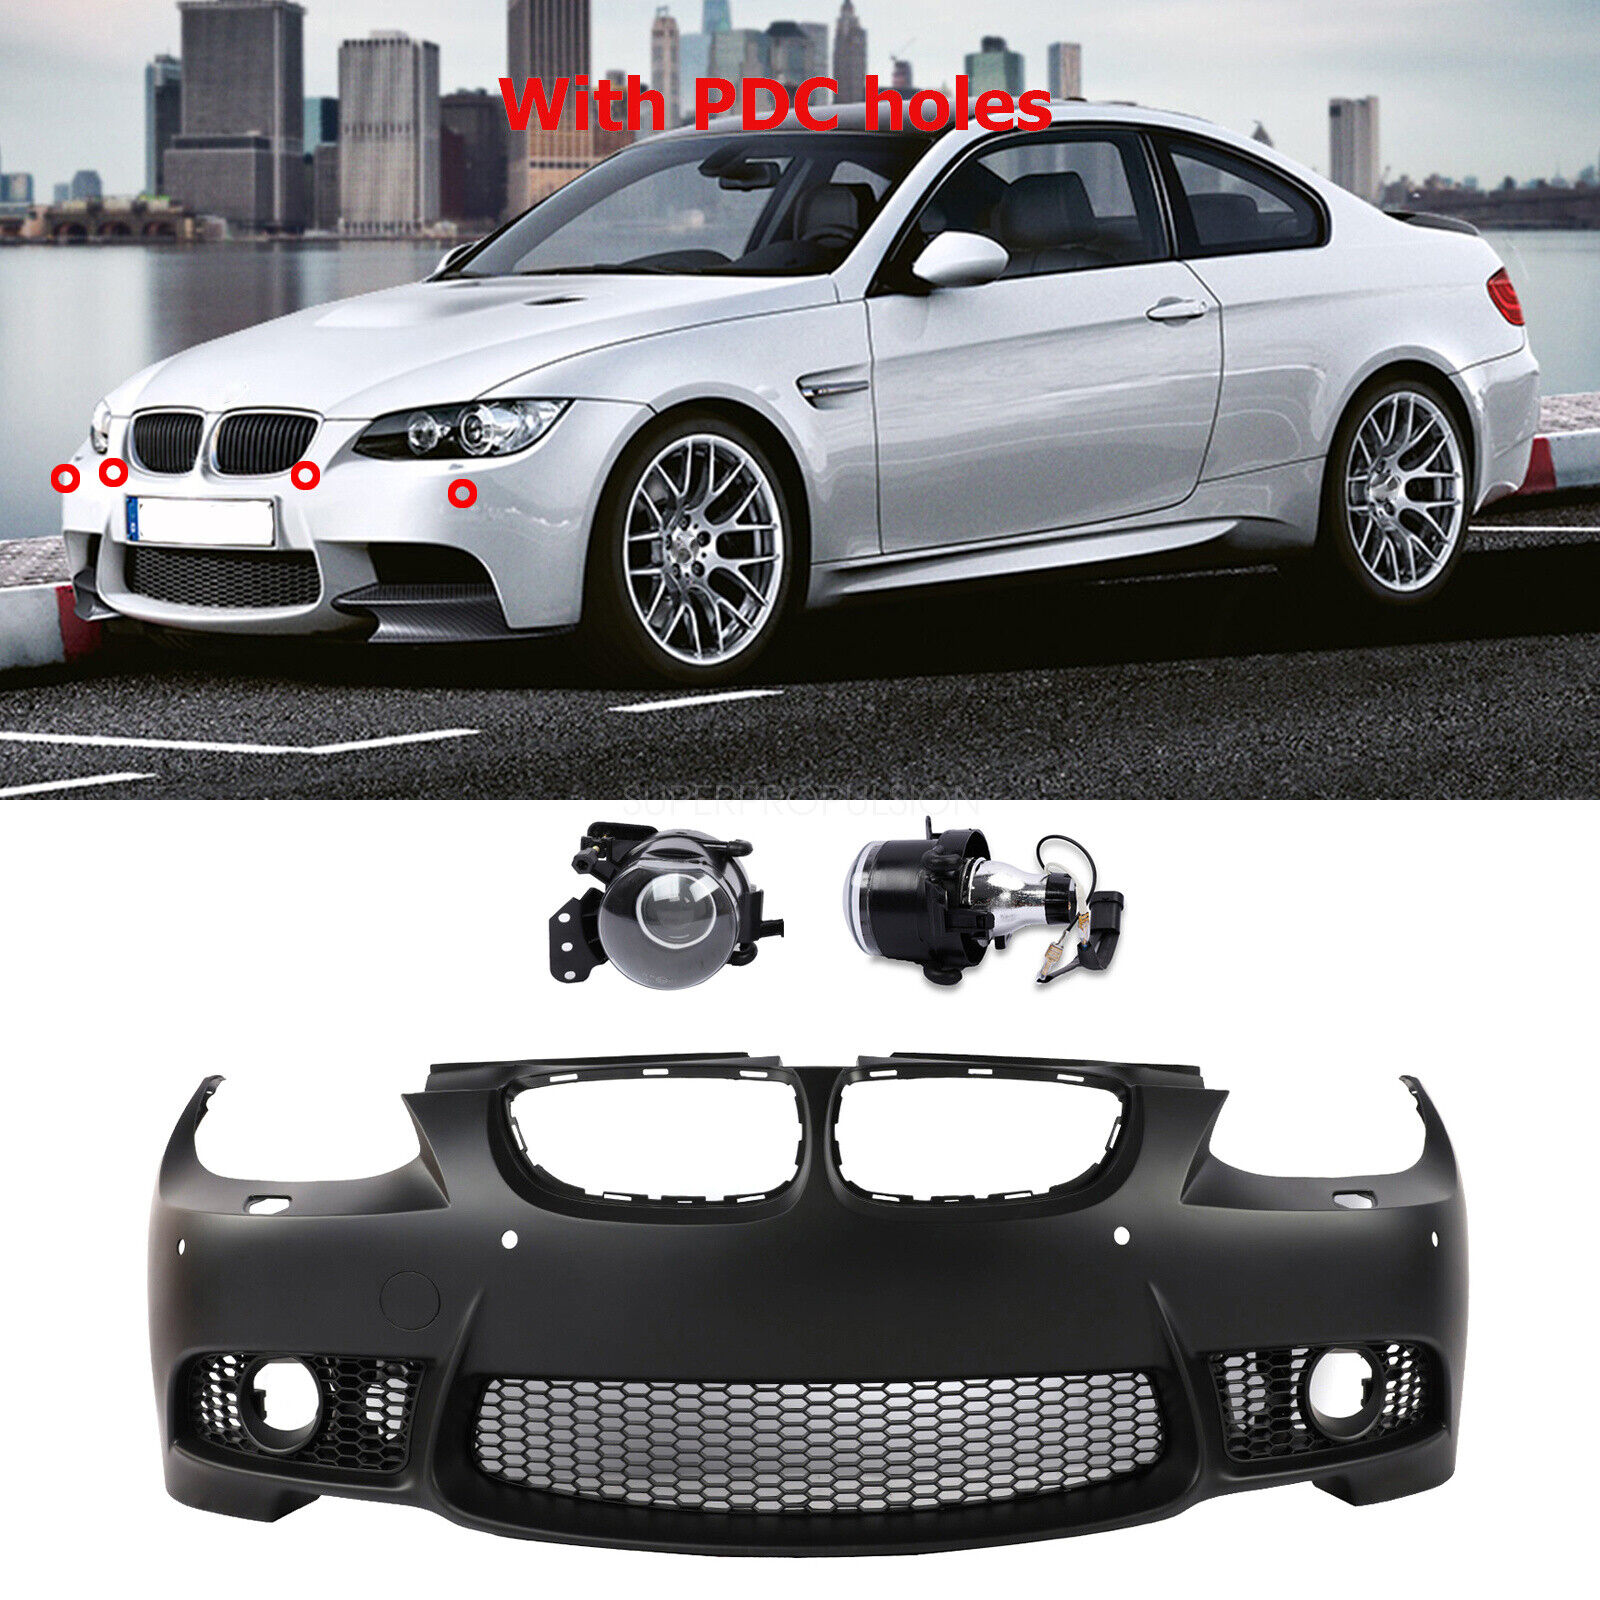 M3 Style Front Bumper Plastic Cover For BMW E92 E93 coupe convertible 07-10